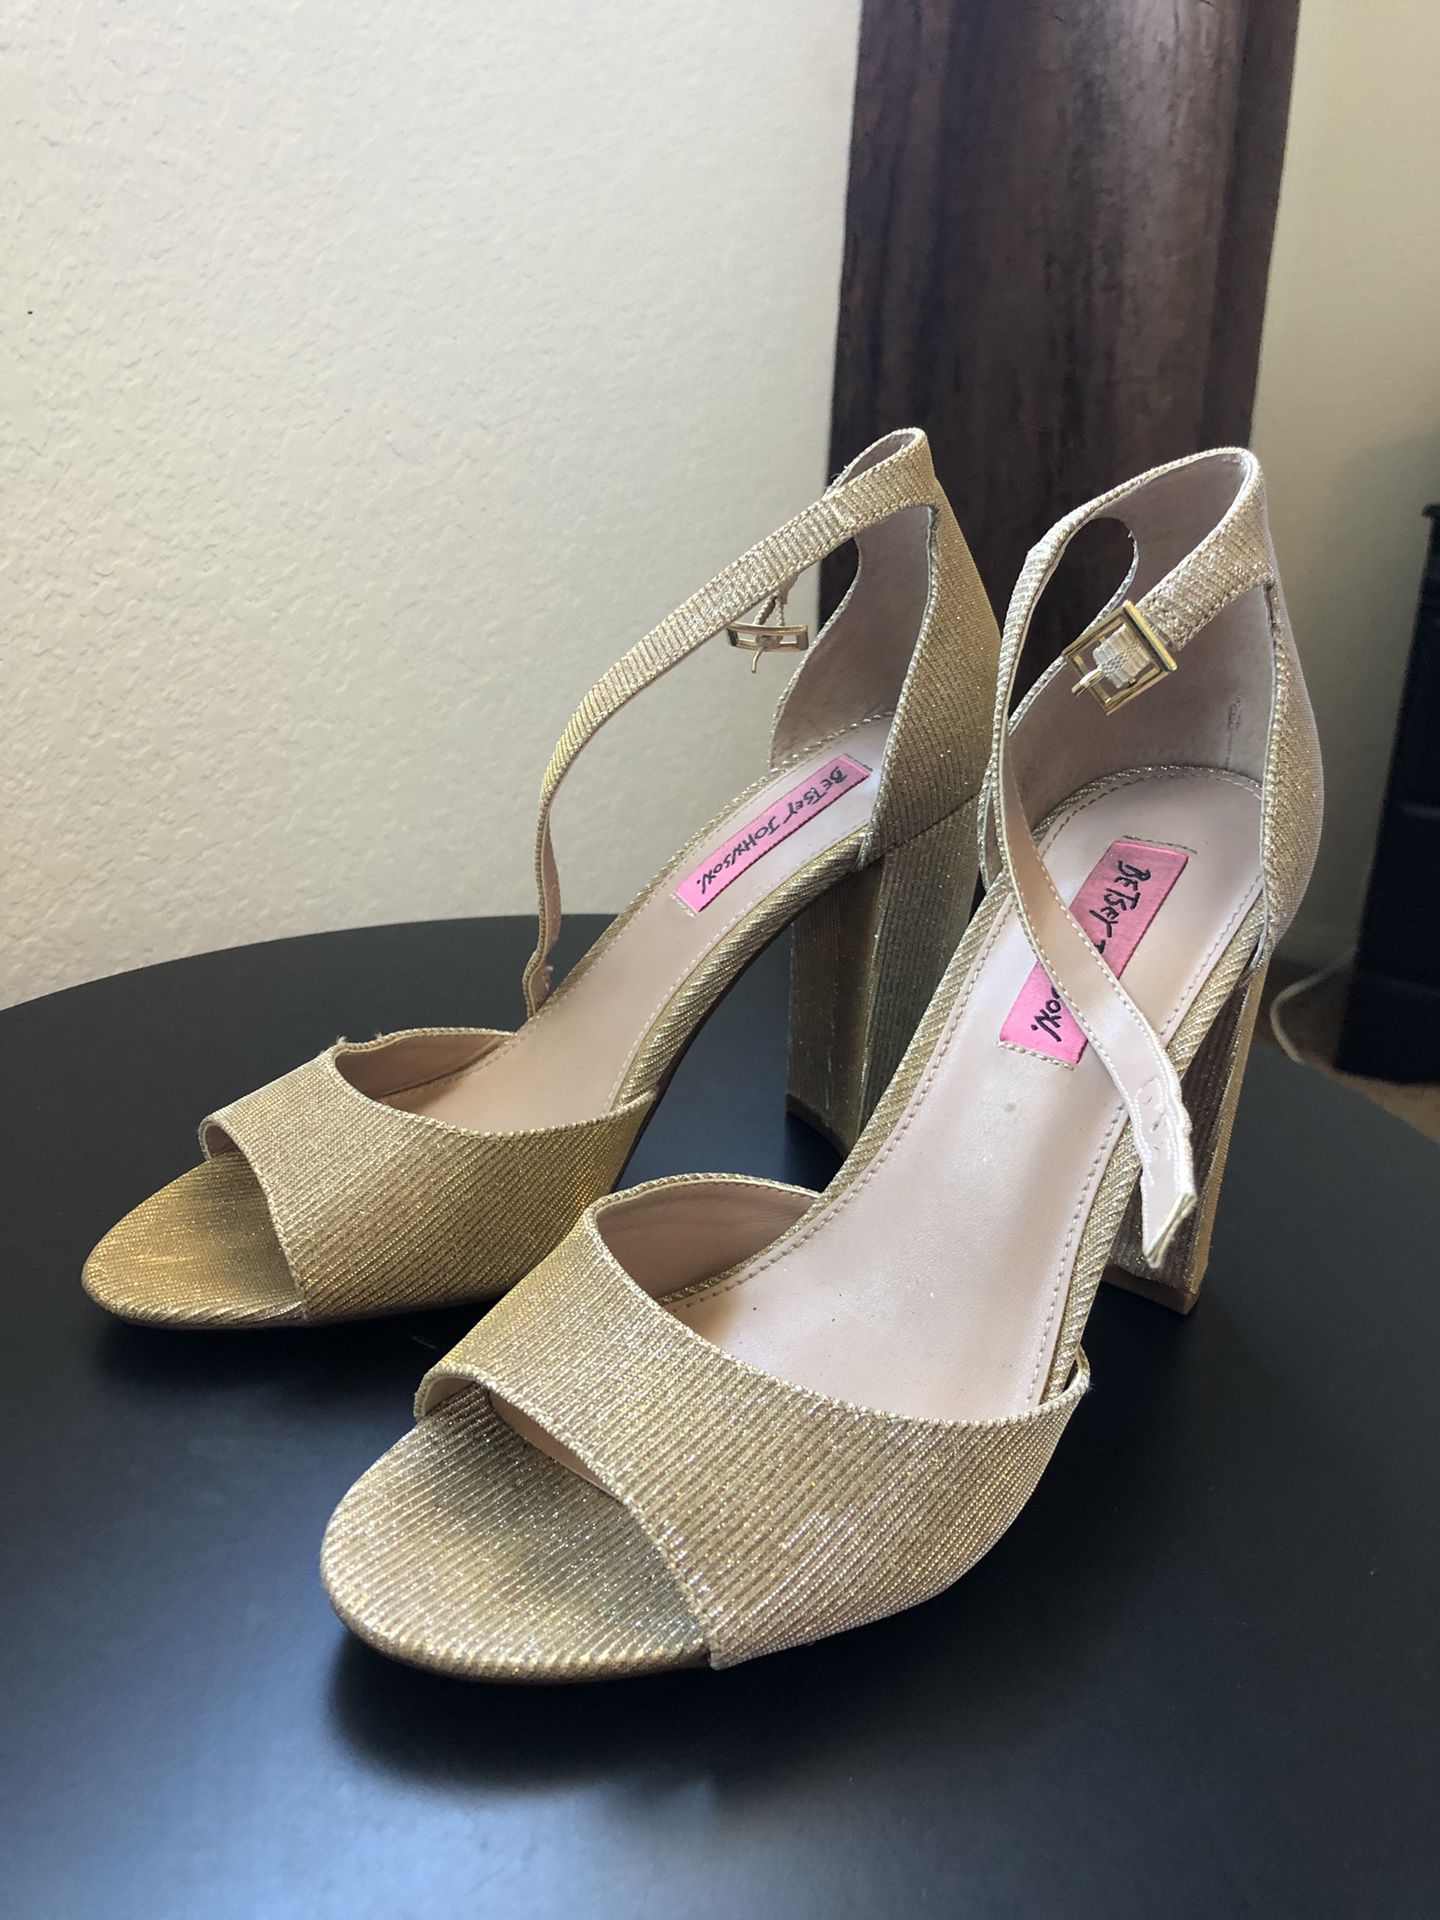 Betsey Johnson Gold Glittery heels Size 8.5